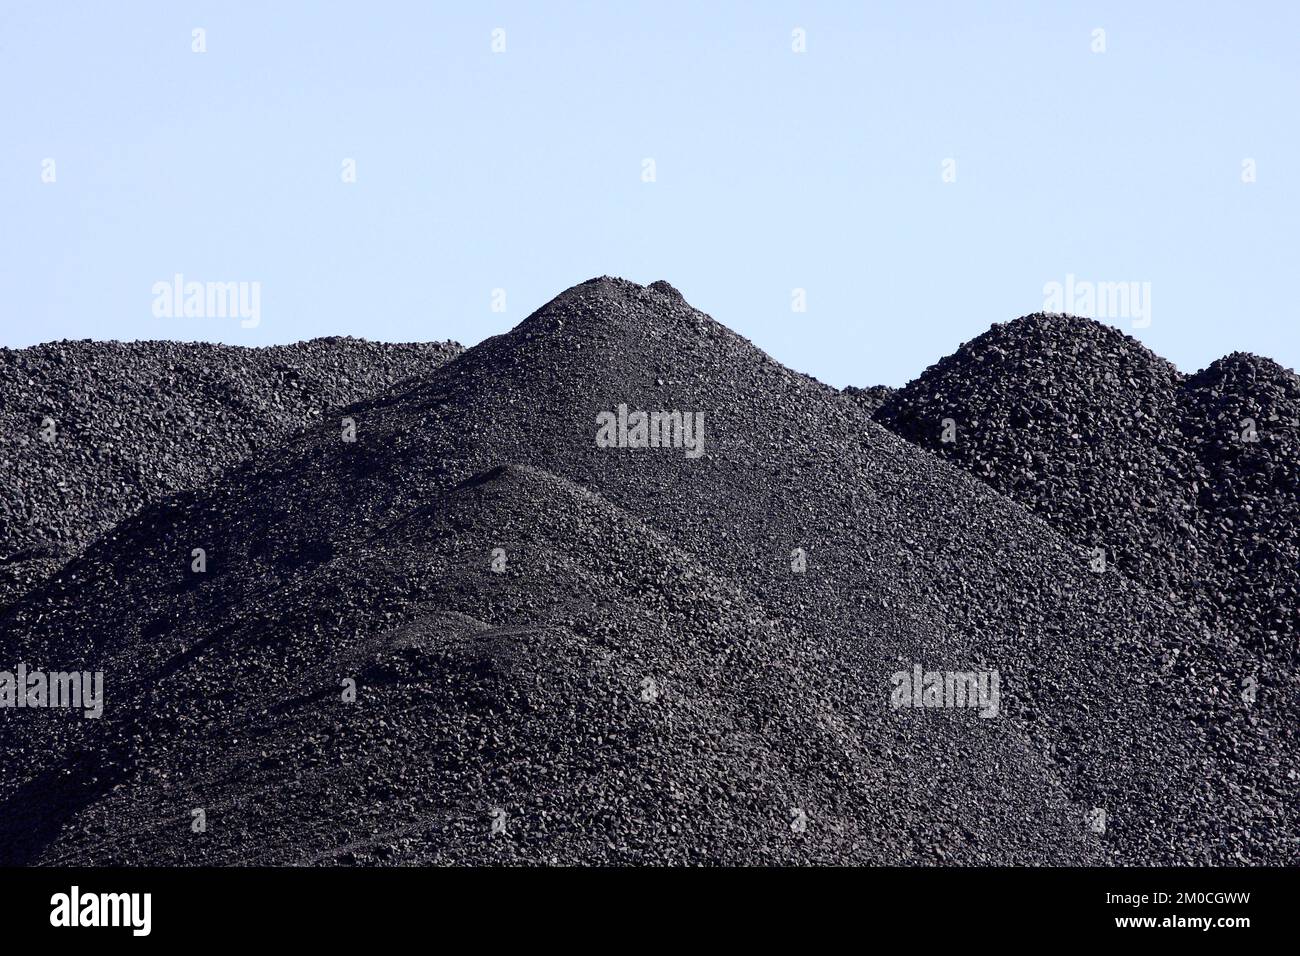 Mucchi di riserve di carbone all'aperto Foto Stock